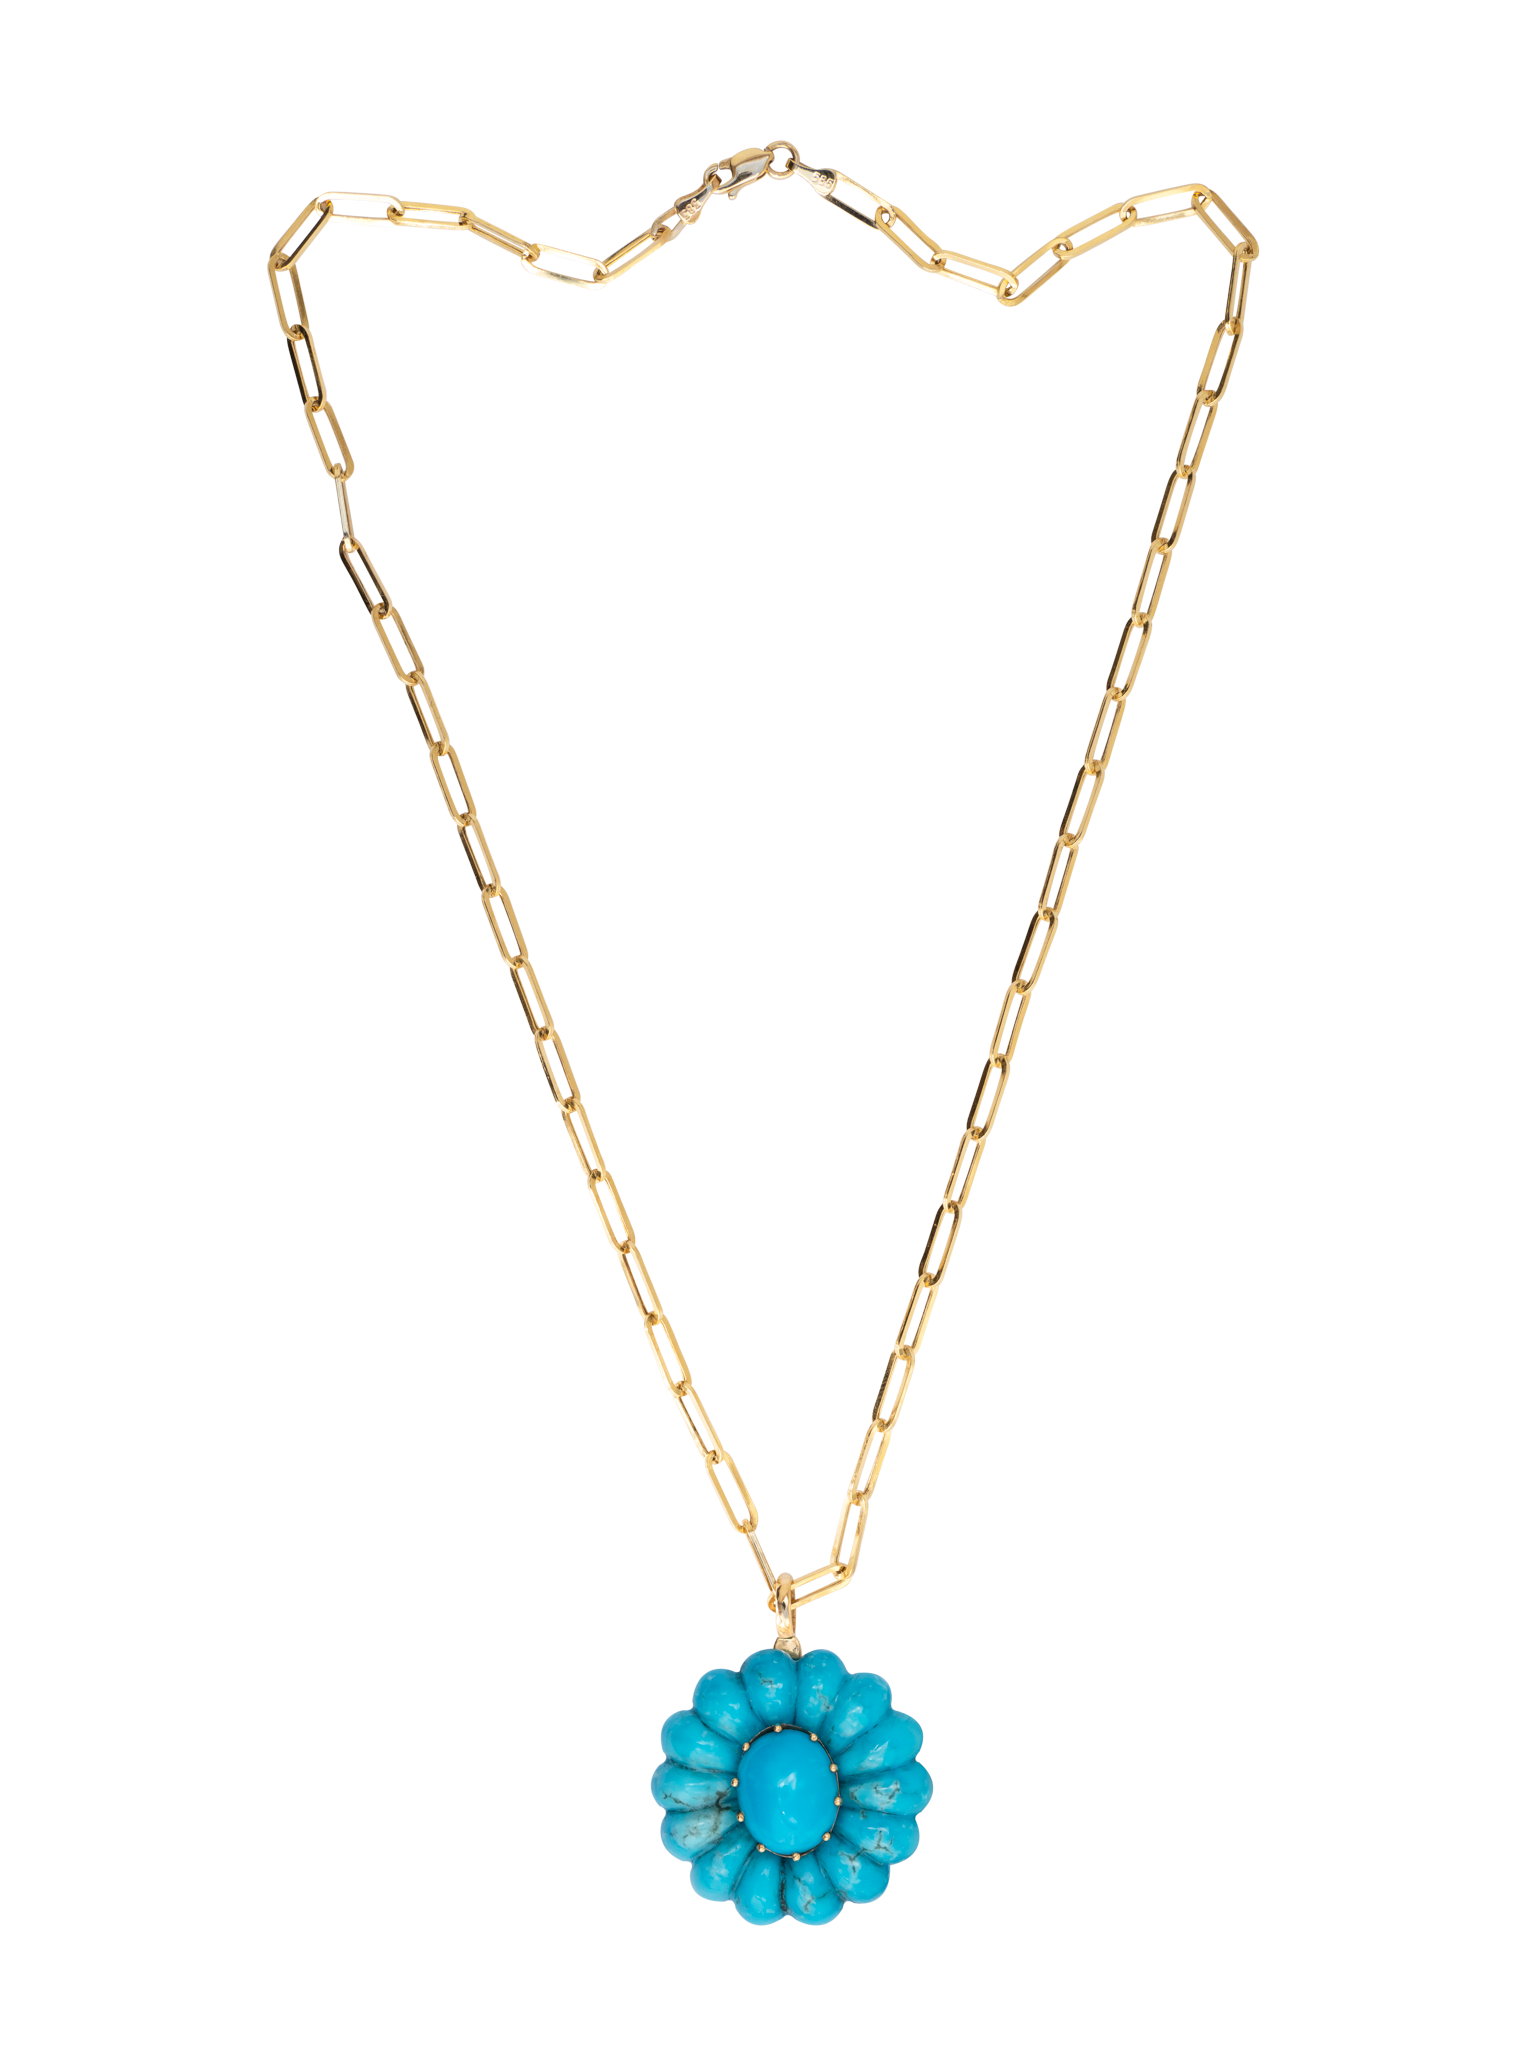 Hura turquoise necklace